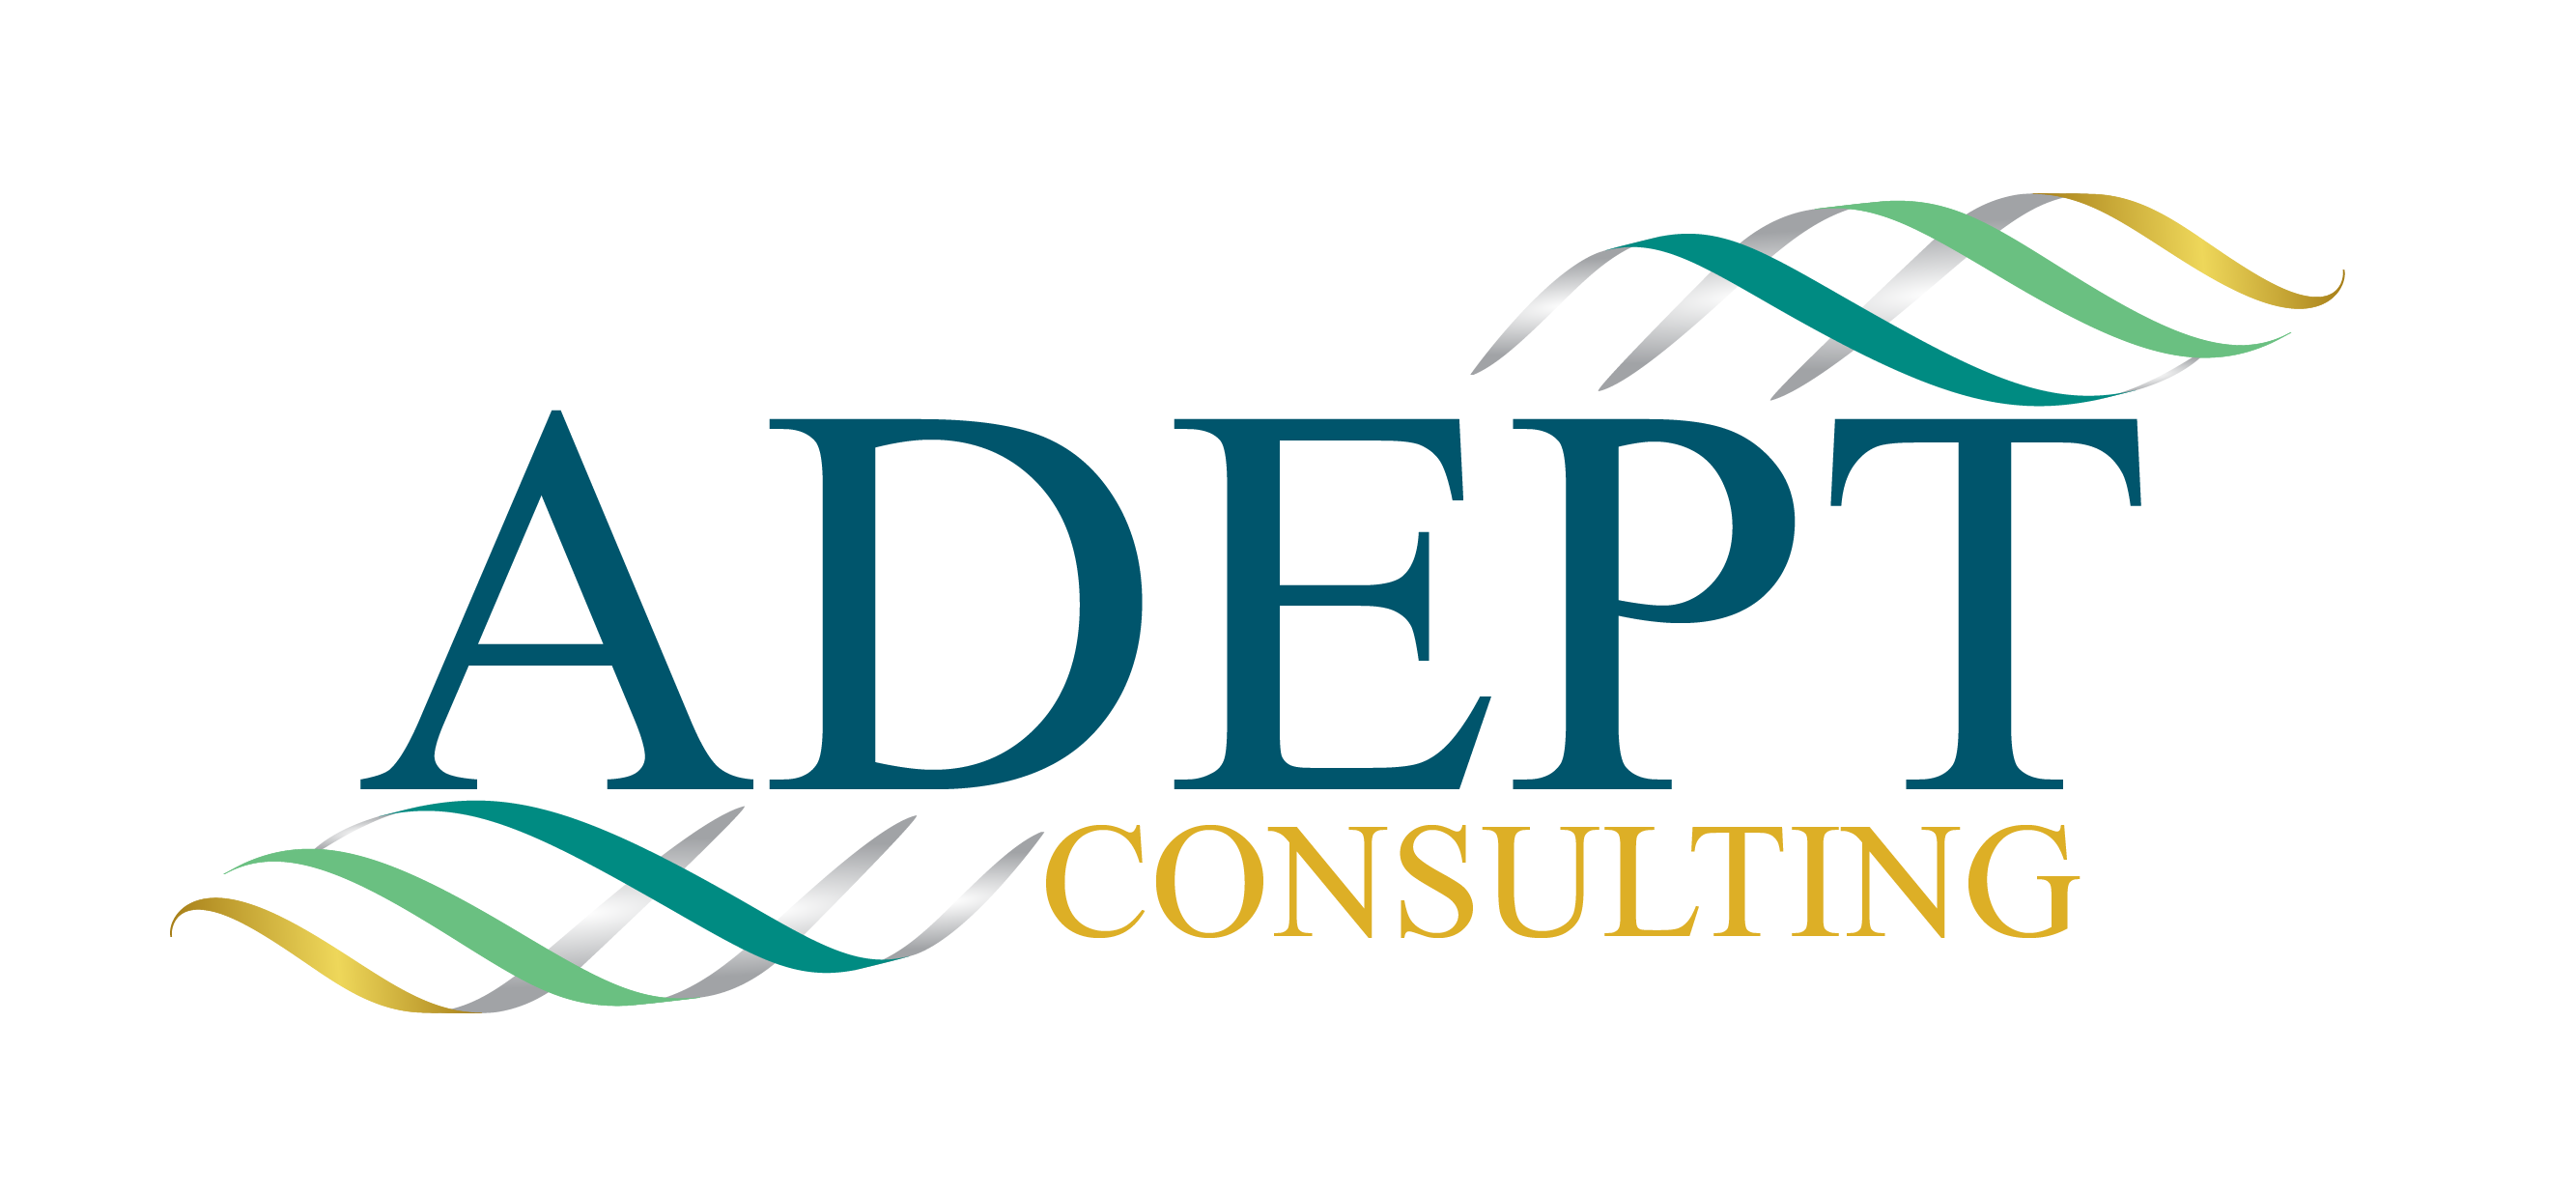 Adept Consulting, LLC